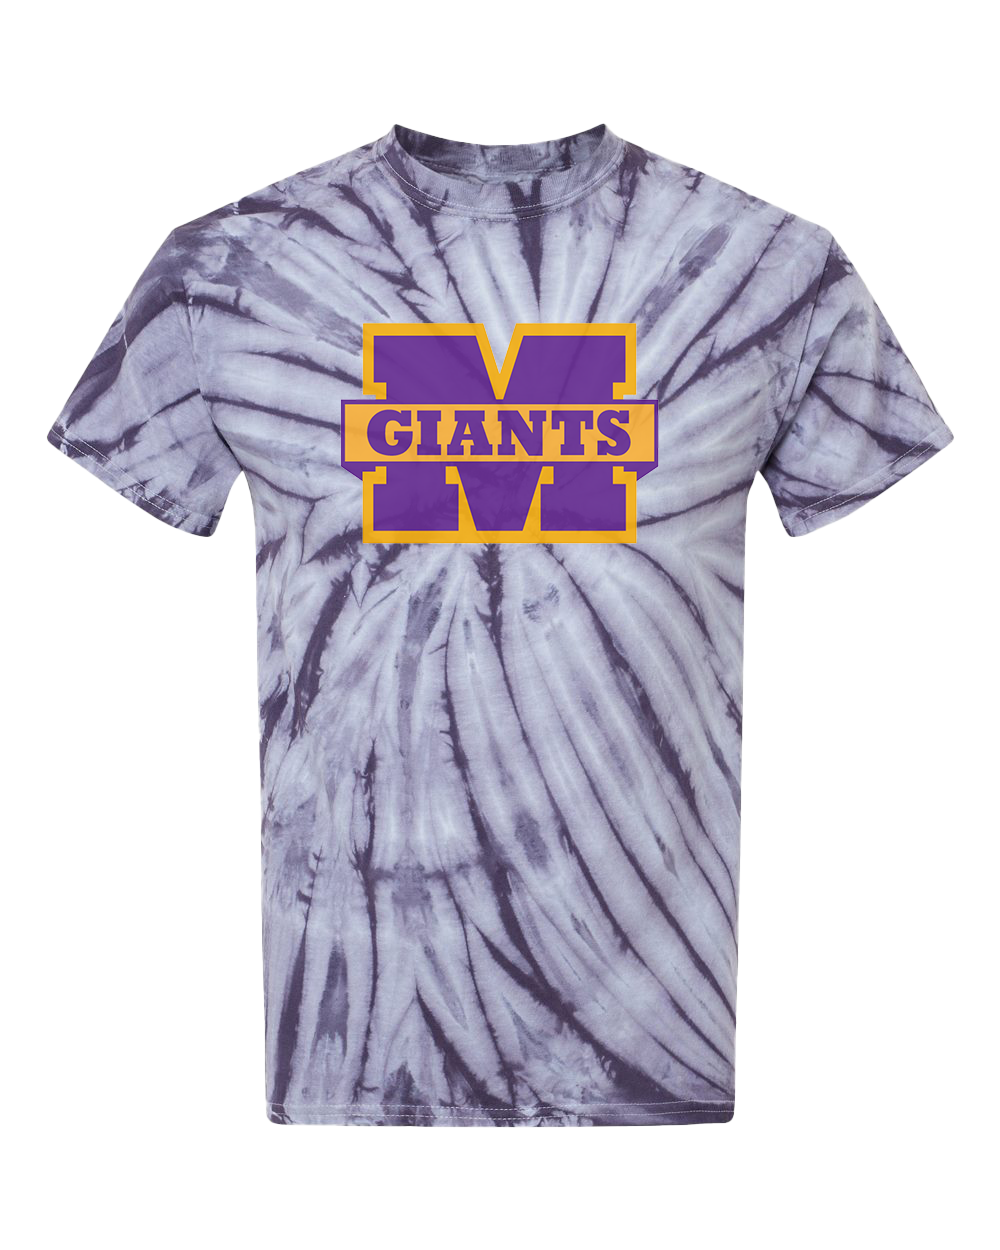 Marion Giants Tie Dye Tshirt - Blackberry